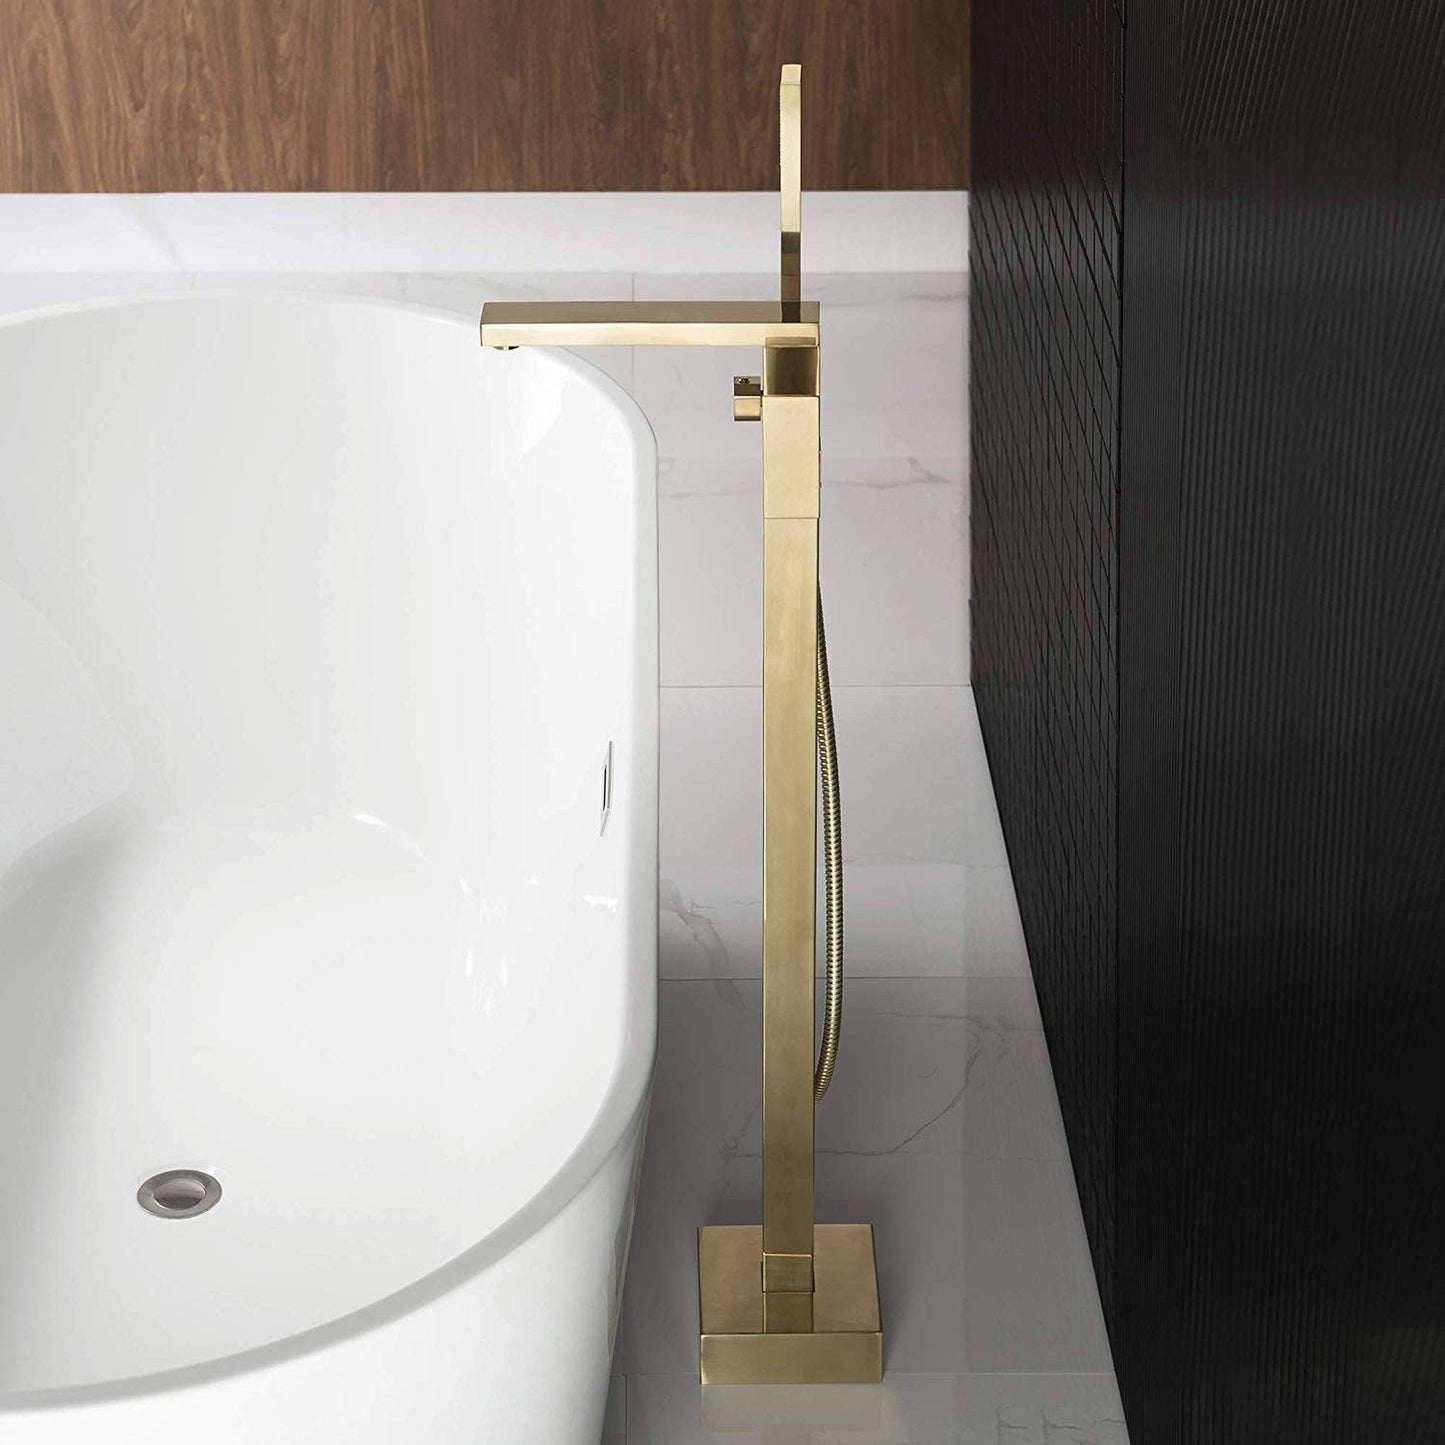 WoodBridge F0008BG Brushed Gold Contemporary Single Handle Floor Mount Freestanding Tub Filler Faucet With Hand Shower